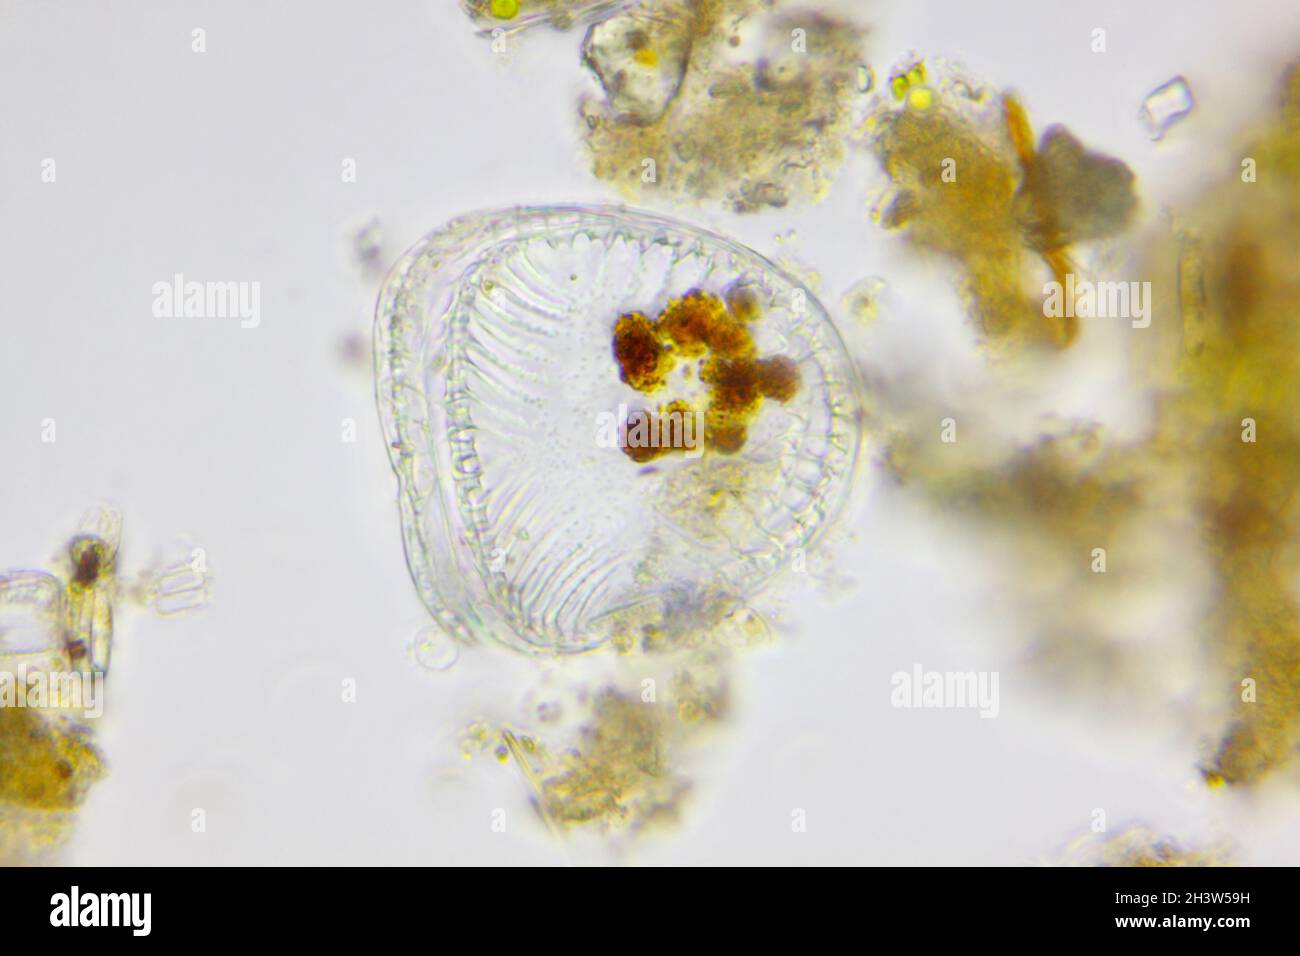 Microscopic view of a diatom. Brightfield illumination. Stock Photo